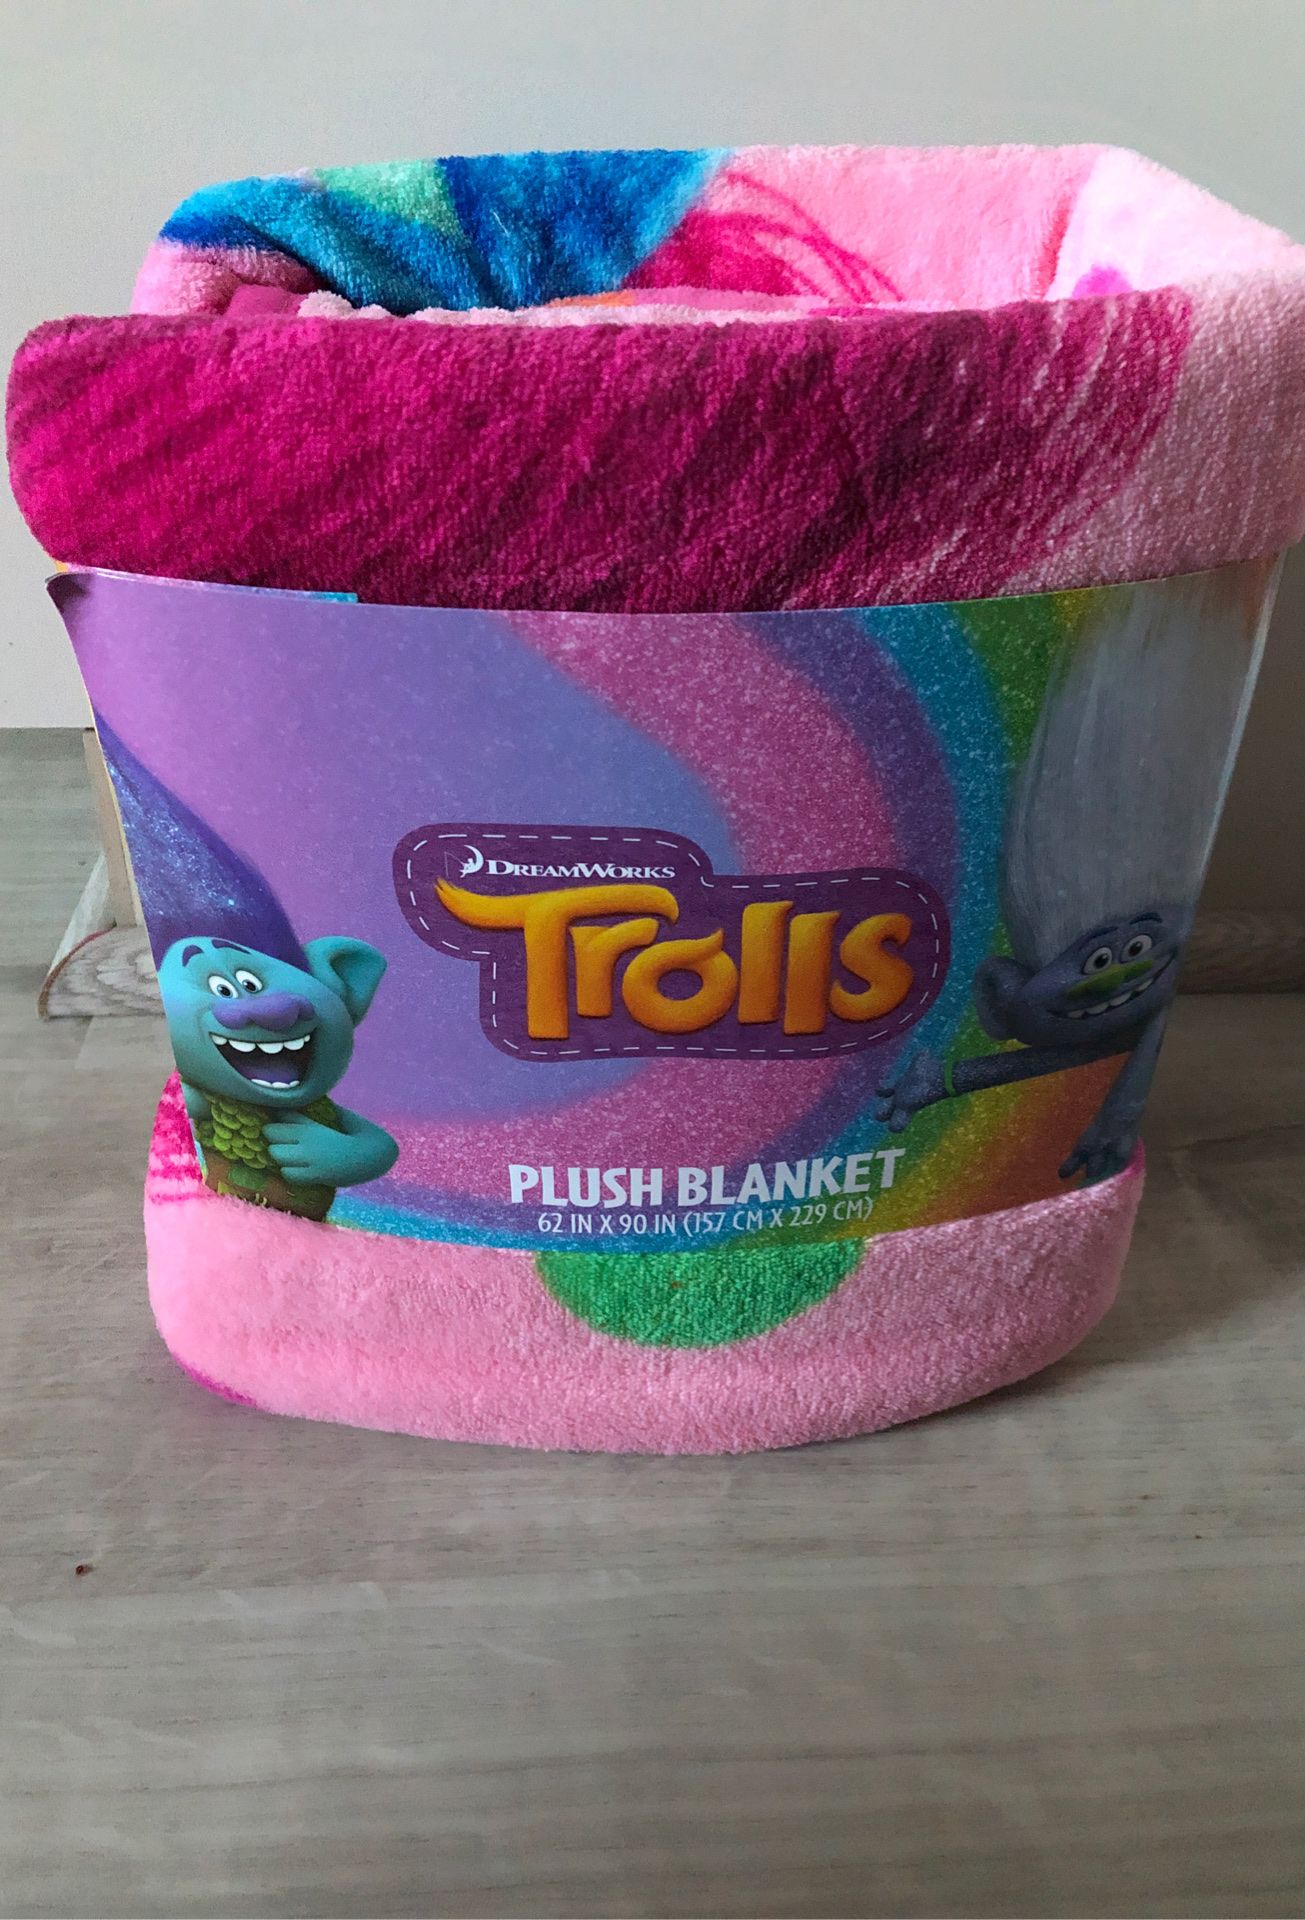 Trolls plush blanket